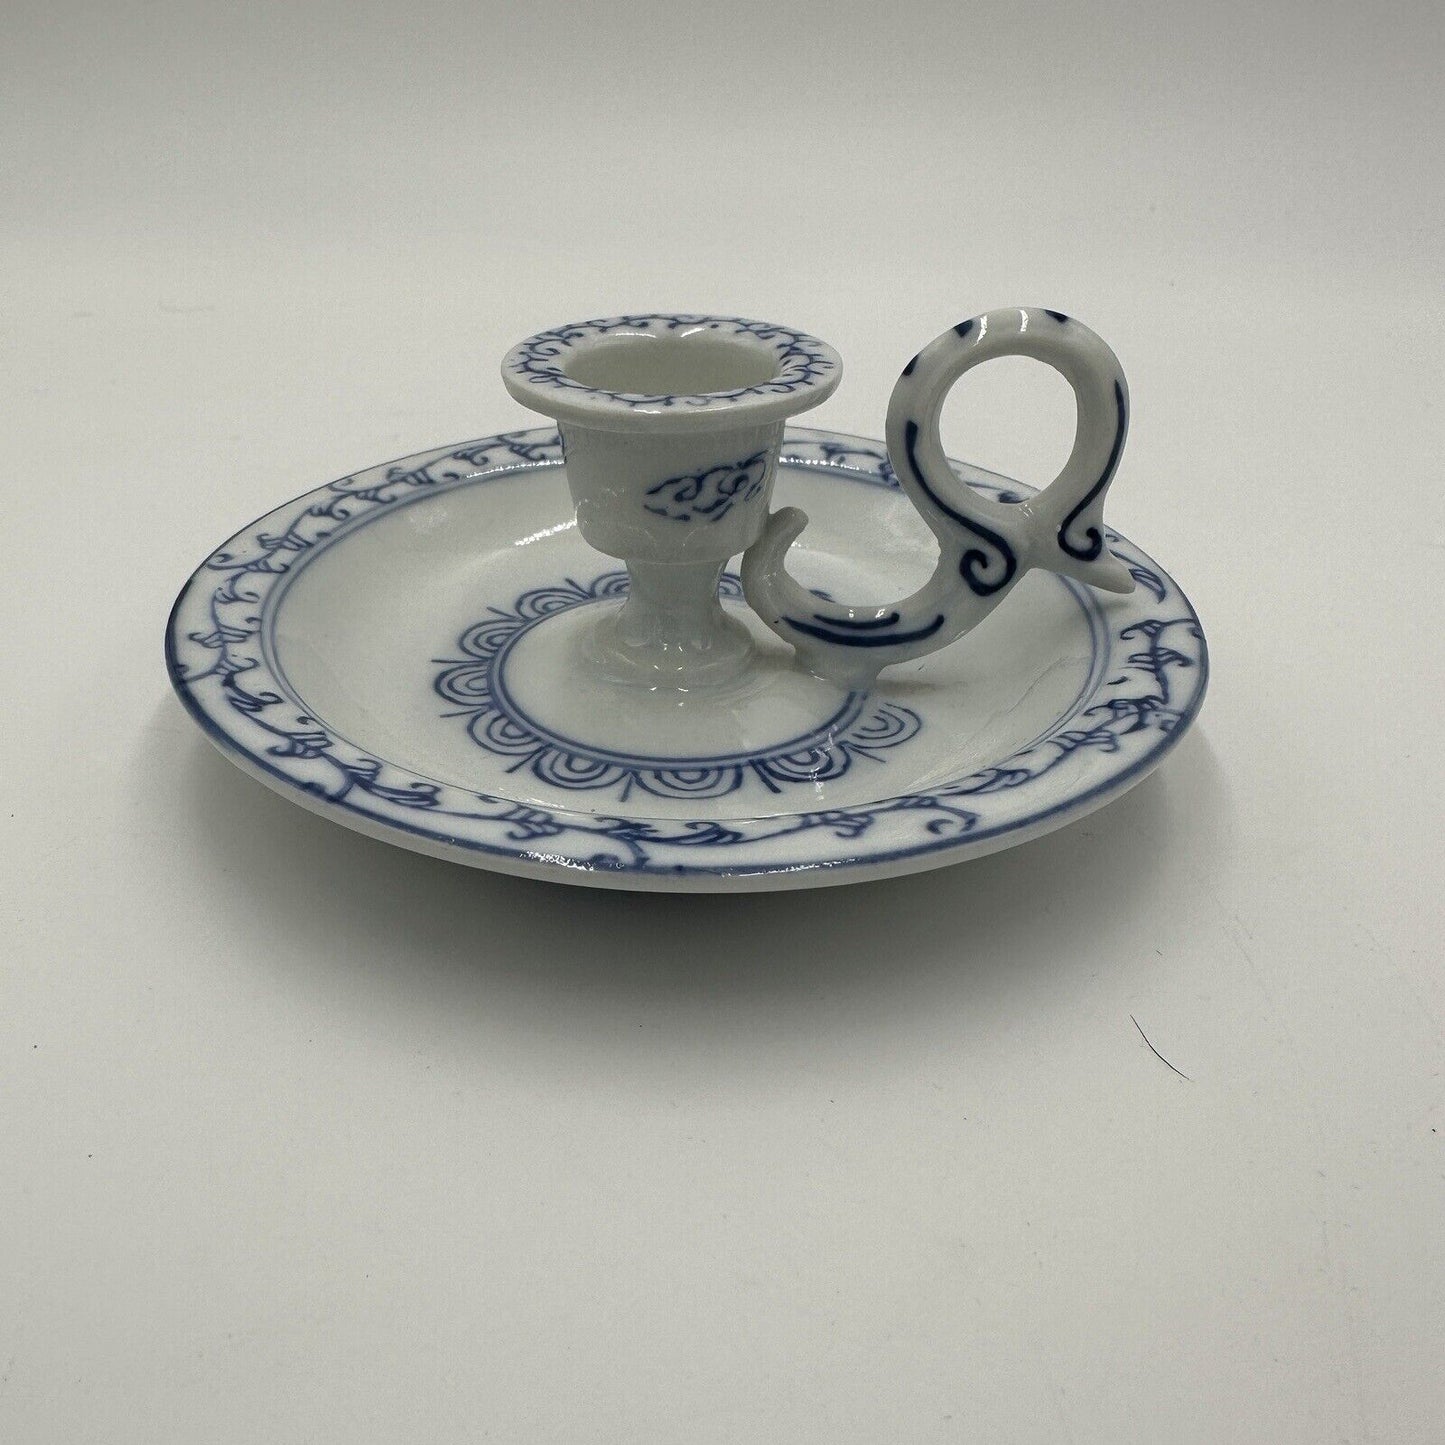 Ming Dynasty Porcelain Candle Holder Vintage Glossy White & Blue Asian Decor